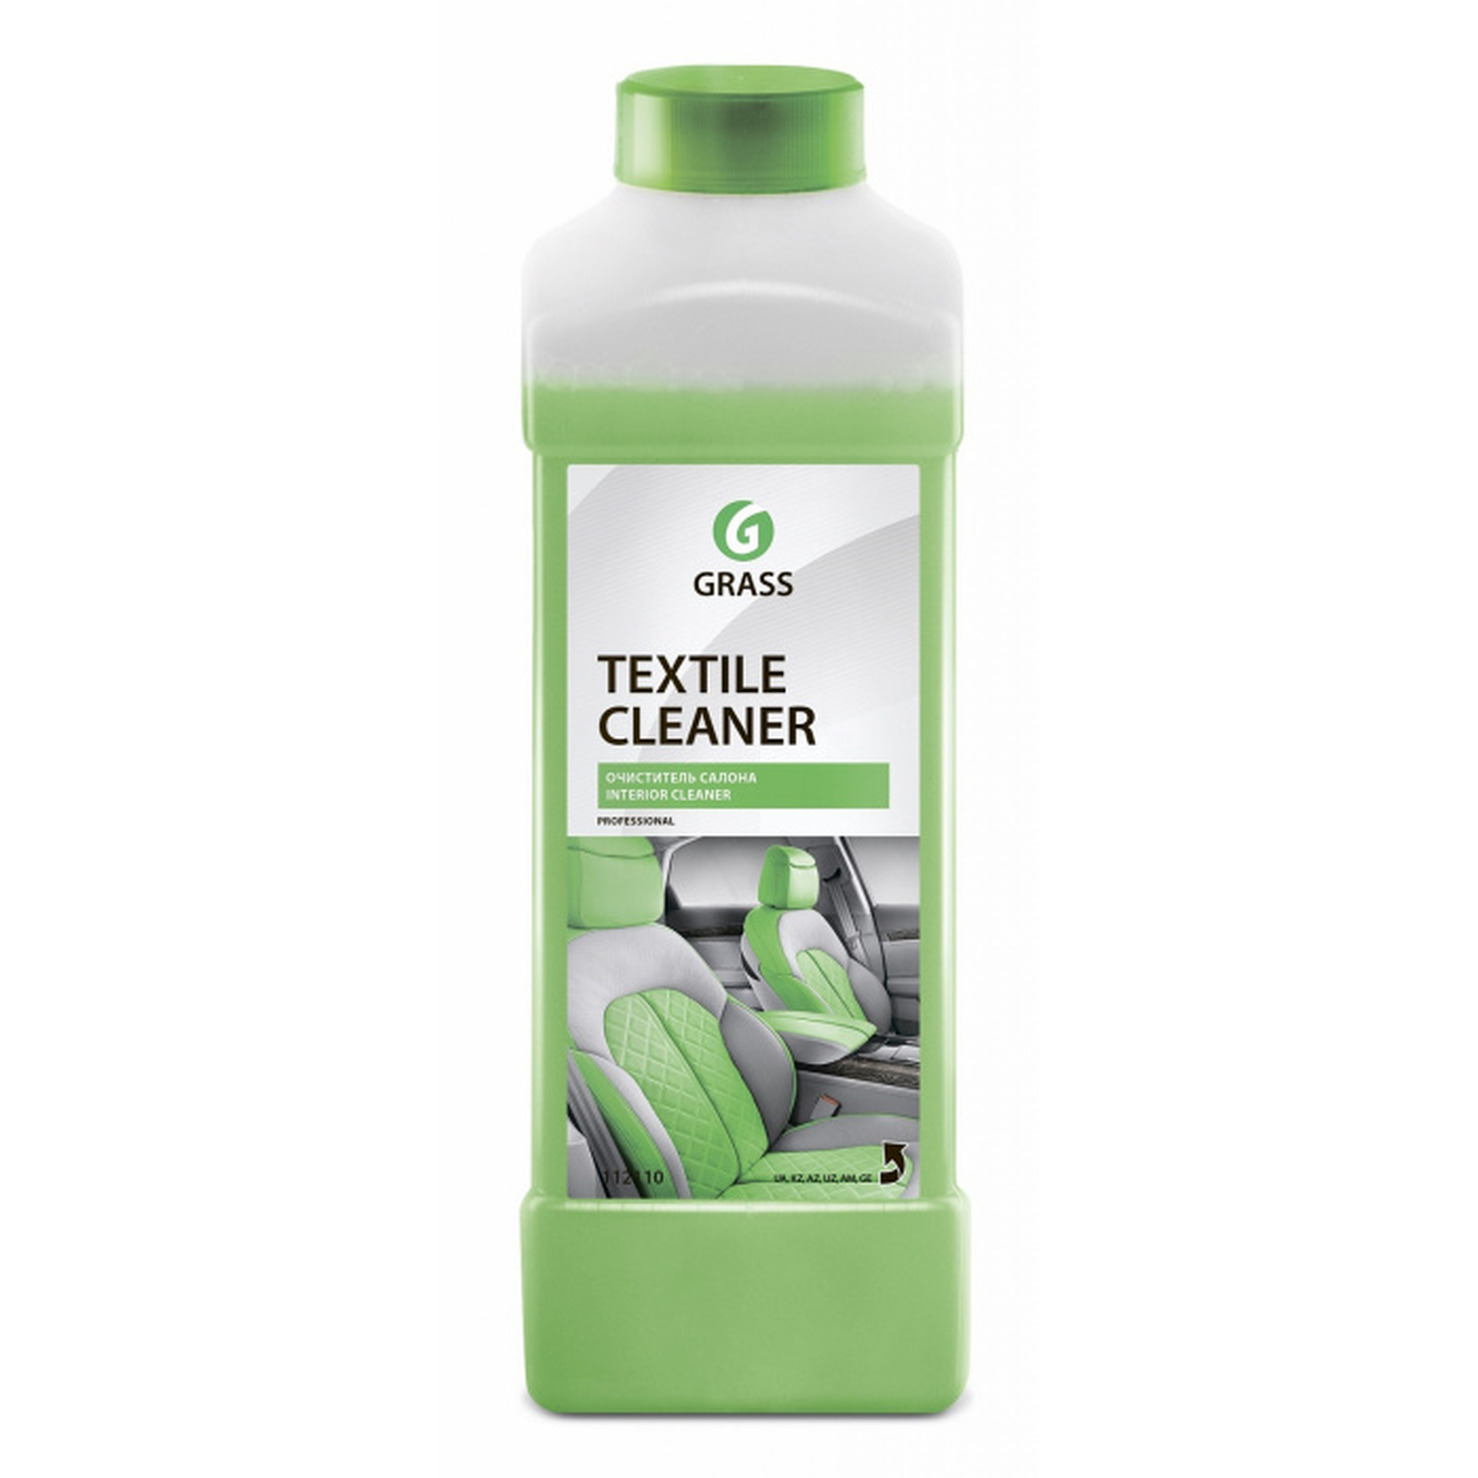 Очиститель салона Grass Textyle Cleaner концентрат 1кг 112110 очиститель салона автомобиля fox chemie universal cleaner 1 л концентрат